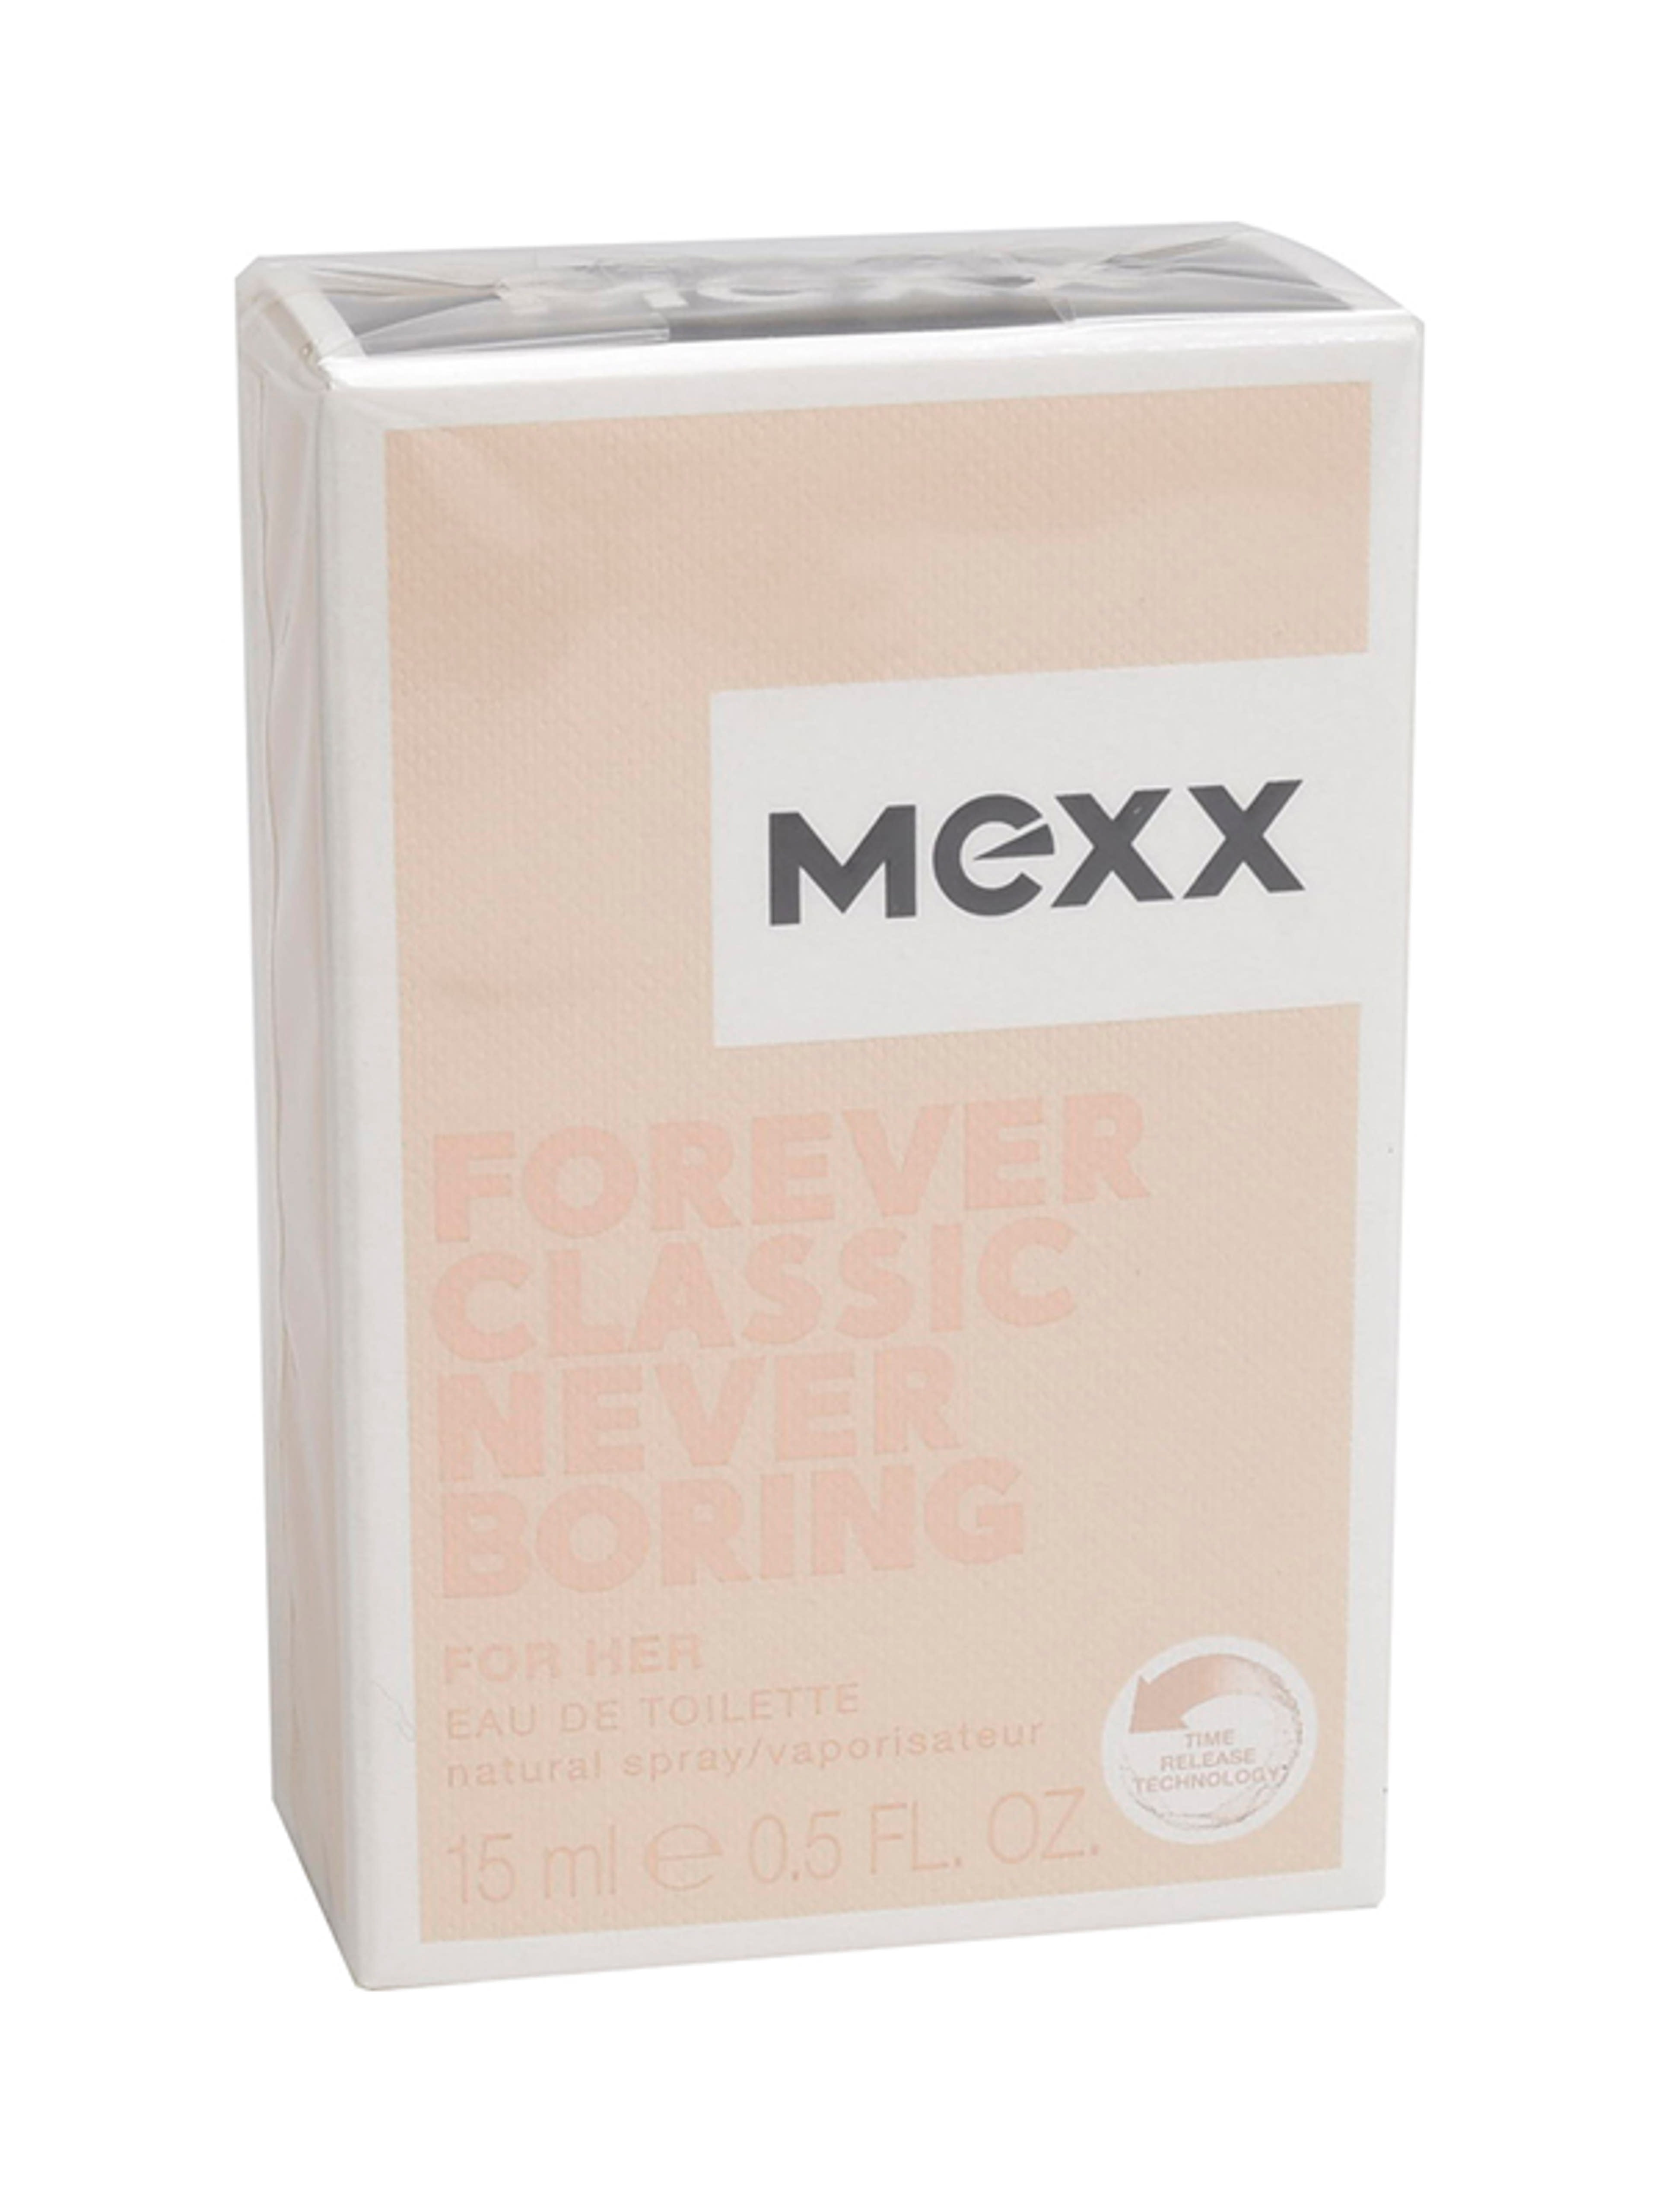 Mexx forever classic never boring női eau de toilette - 15 ml-1